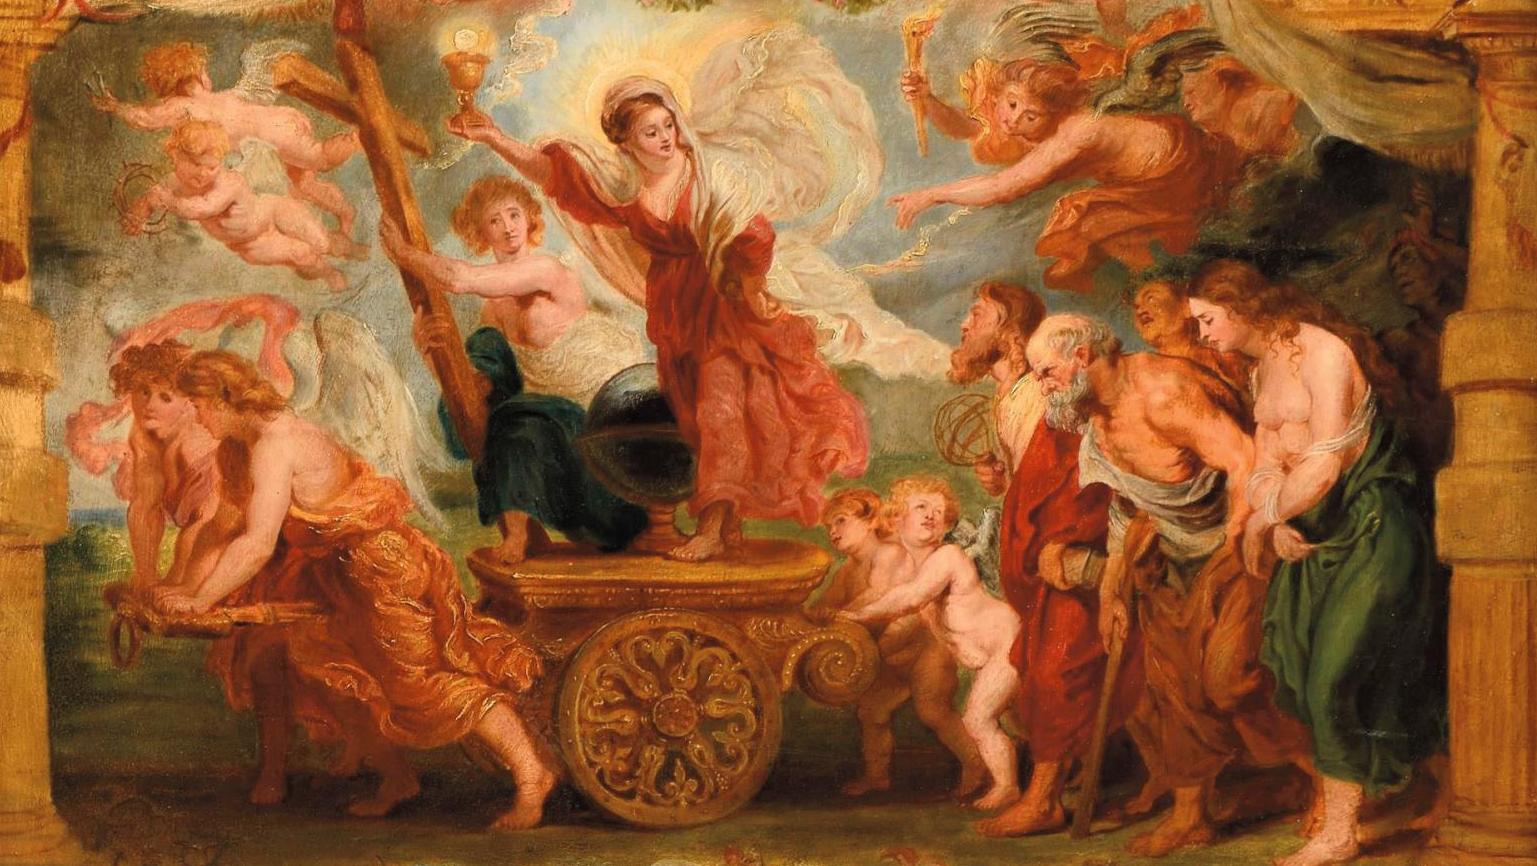   Le triomphe de Rubens 